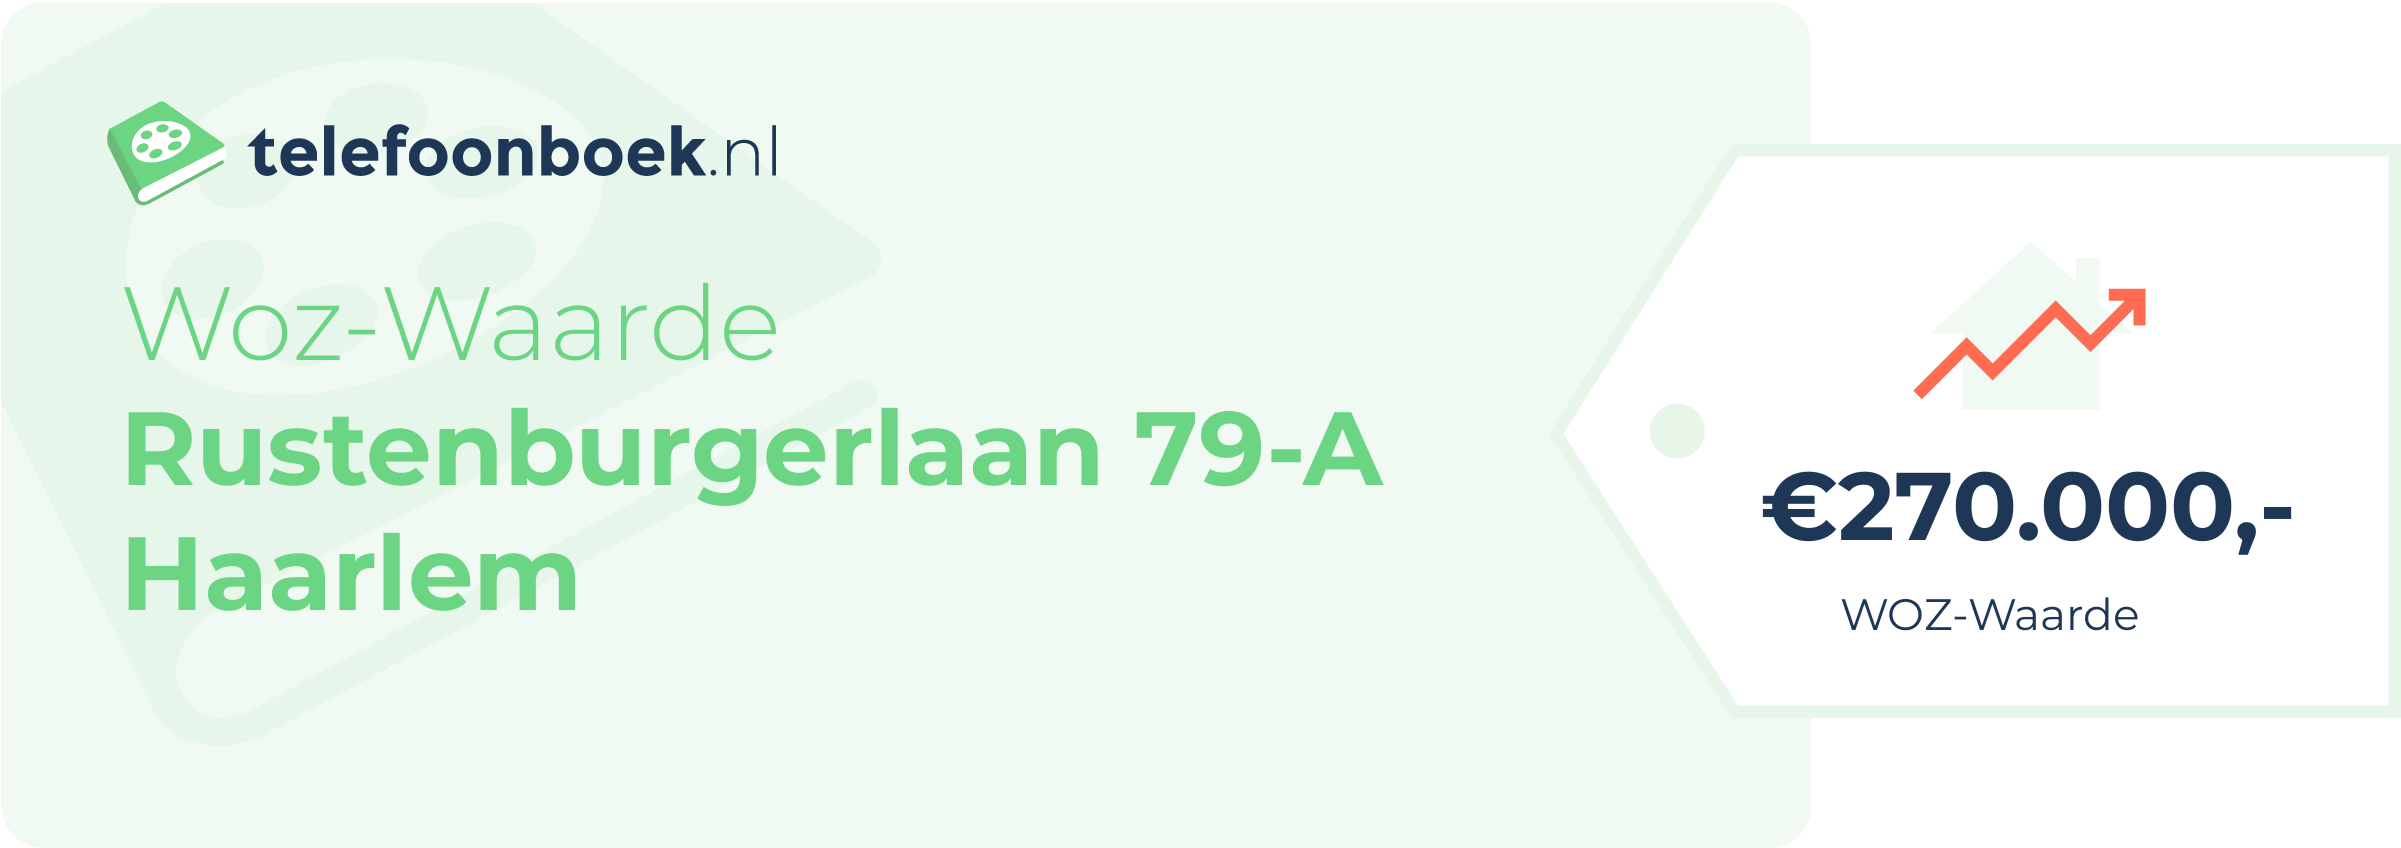 WOZ-waarde Rustenburgerlaan 79-A Haarlem